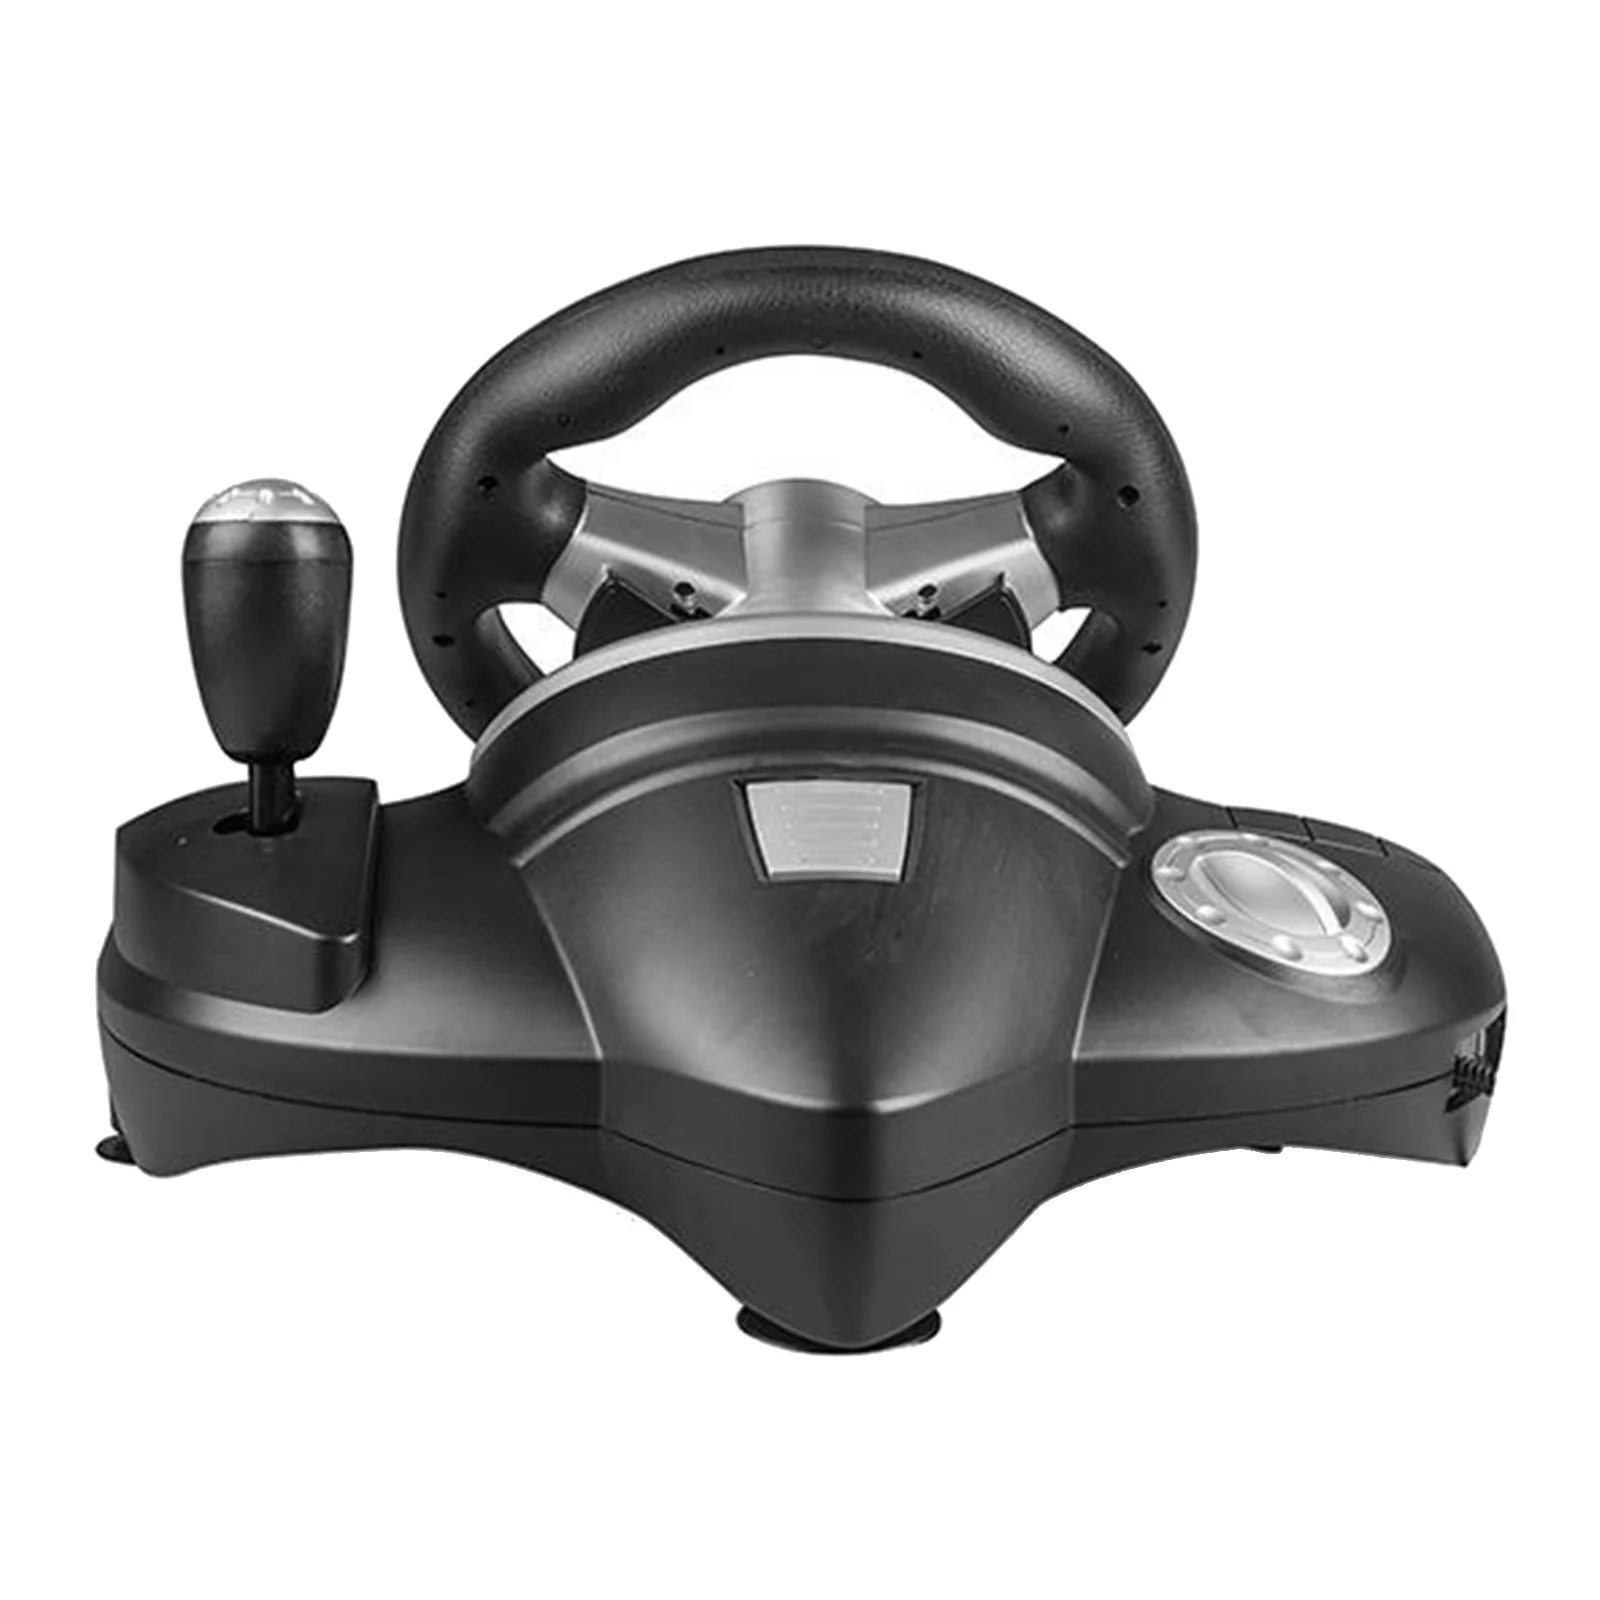 USB Vibration Car Racing Gaming Steering Wheel Pedal Driving Simulator for PS4/PS3 PC Black